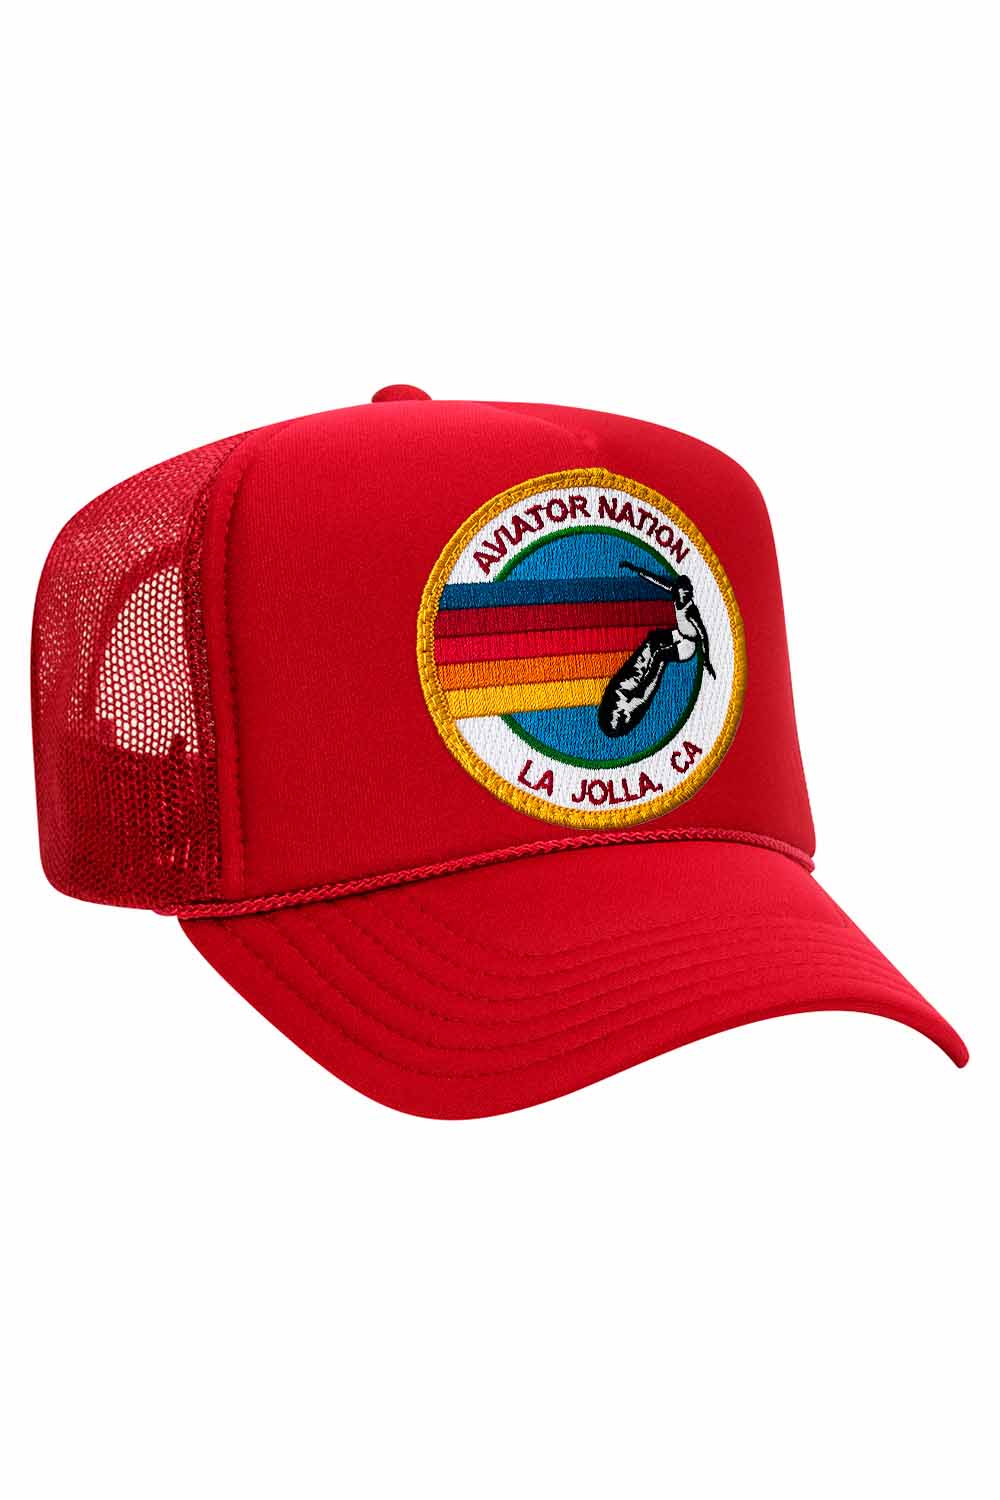 AVIATOR NATION LA JOLLA TRUCKER HAT HATS Aviator Nation OS RED 